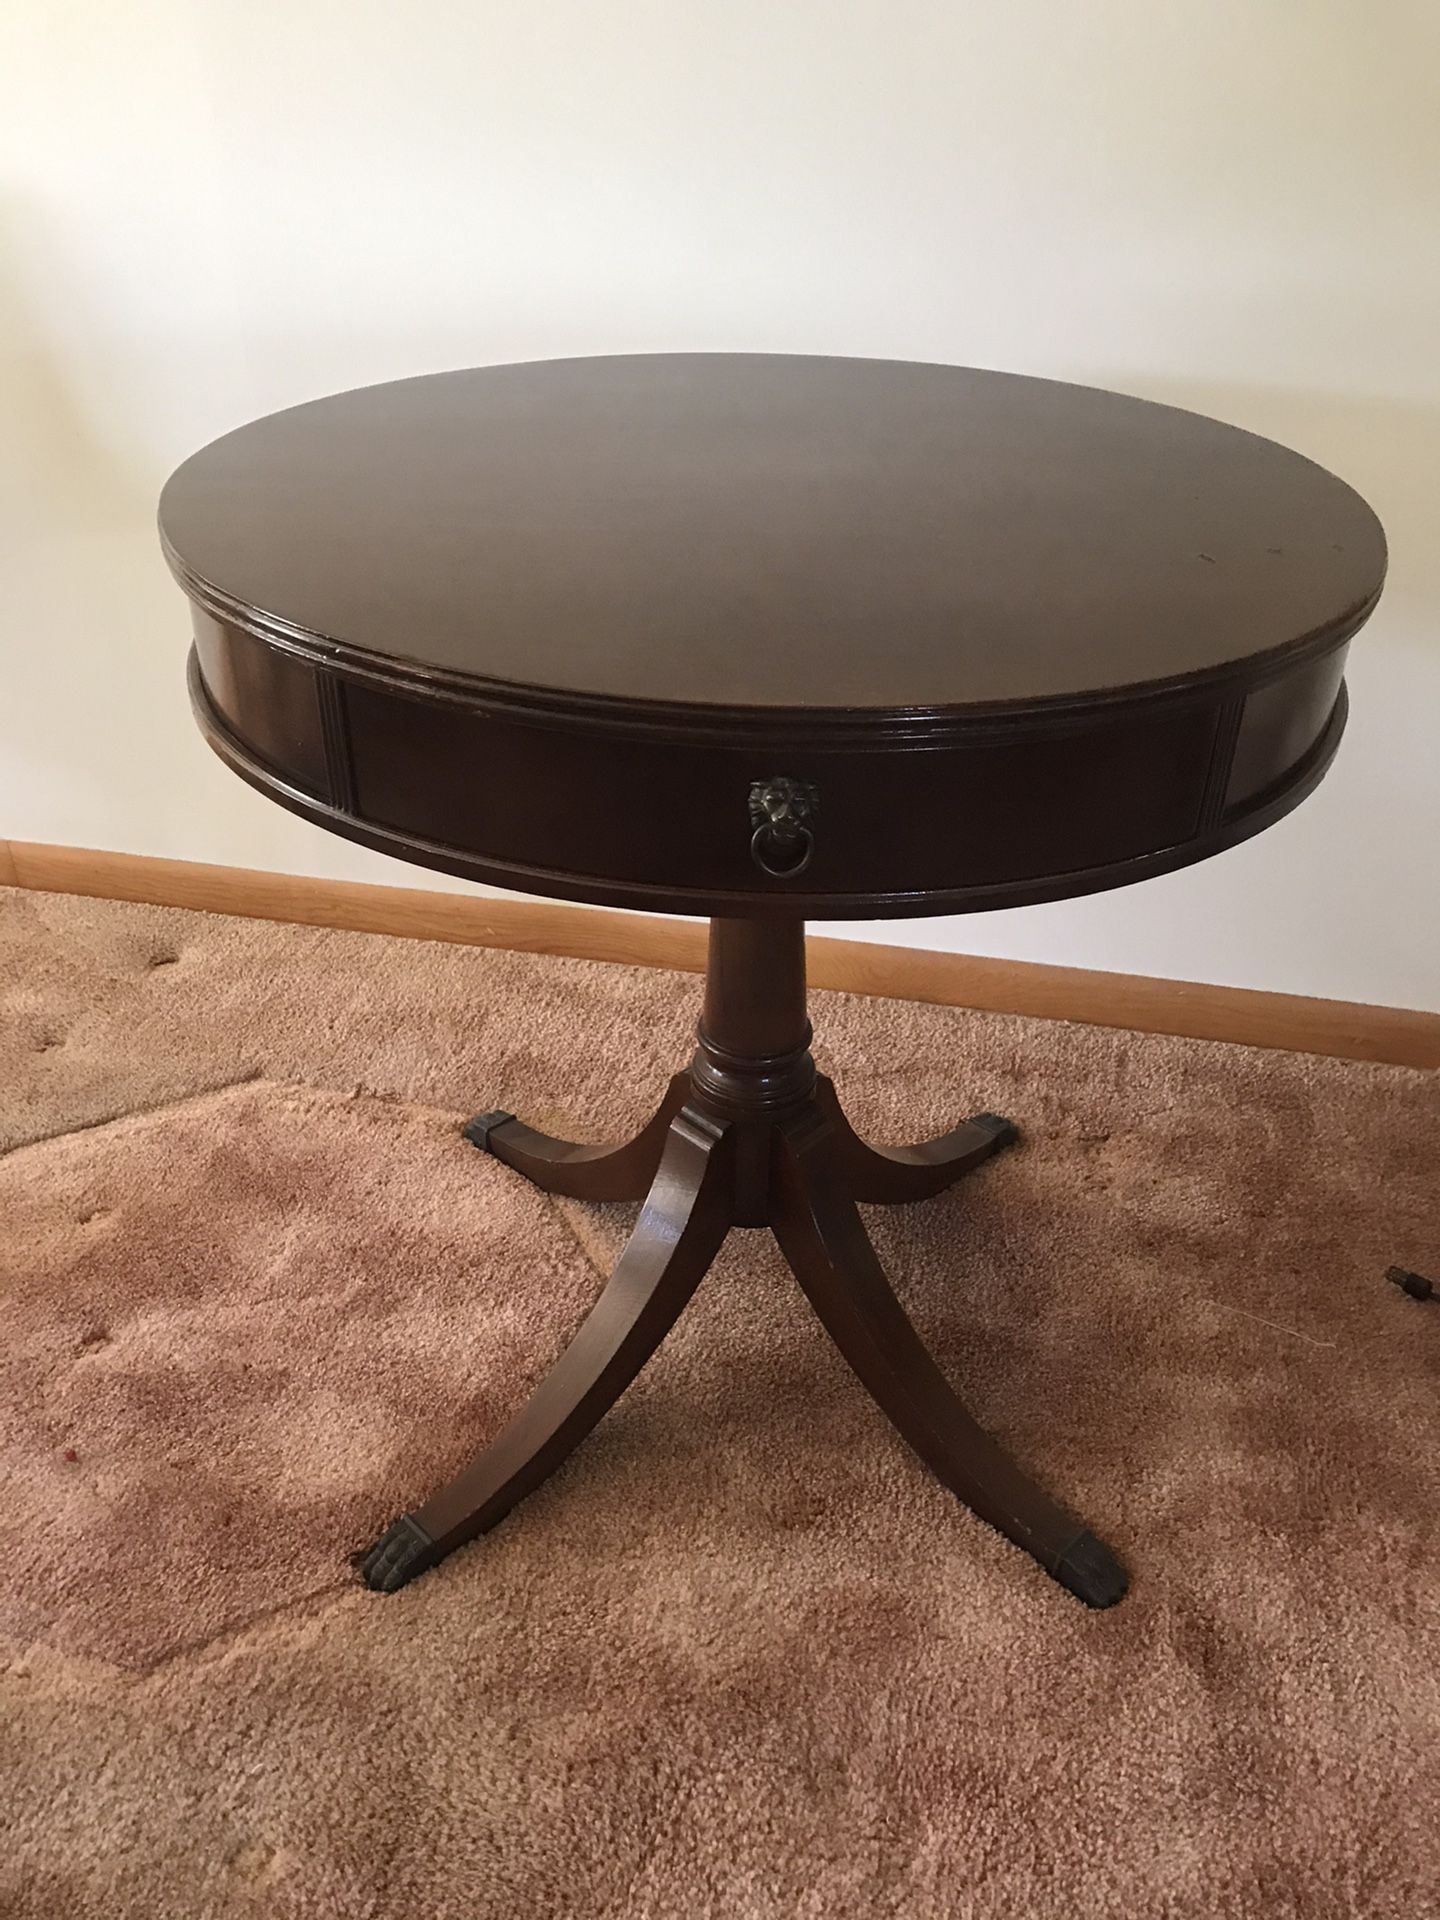 Rare Antique drum table with Lion handles